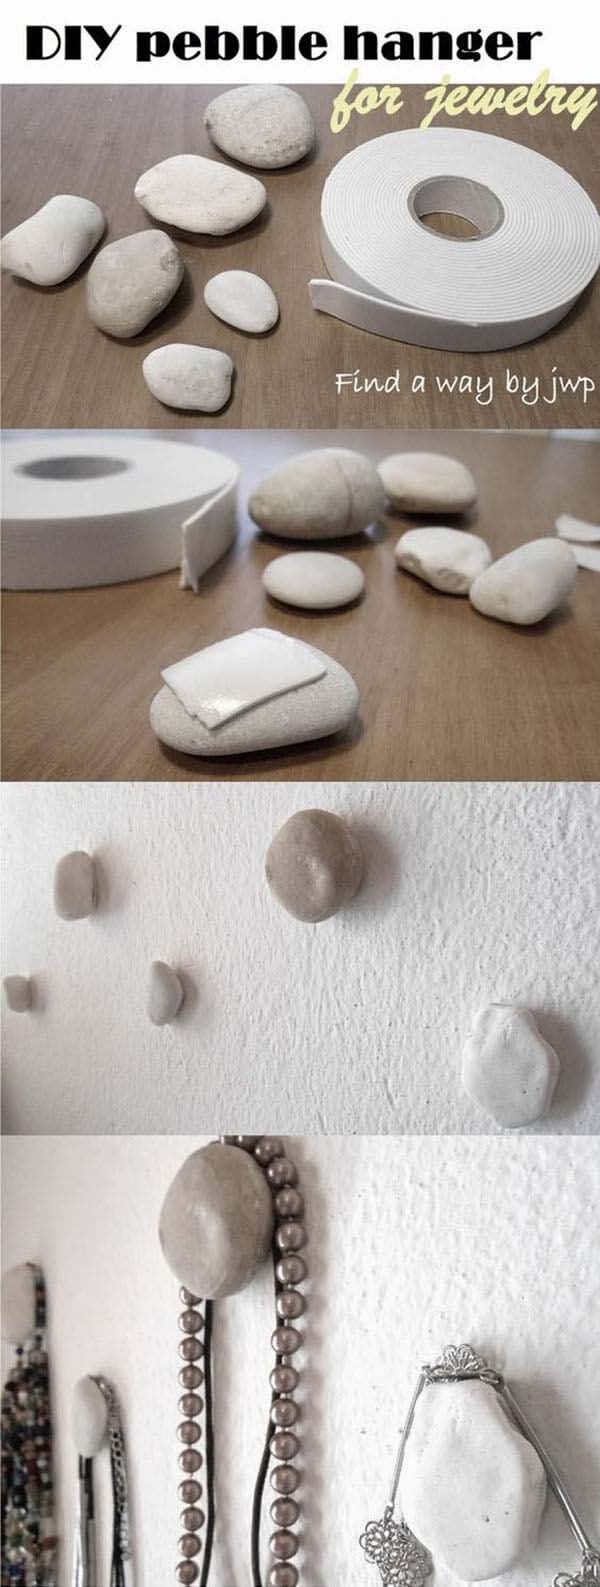 Repurposed Pebbles Make a Great Alternative to Hooks #homedecor #pebbles #rocks #decorhomeideas